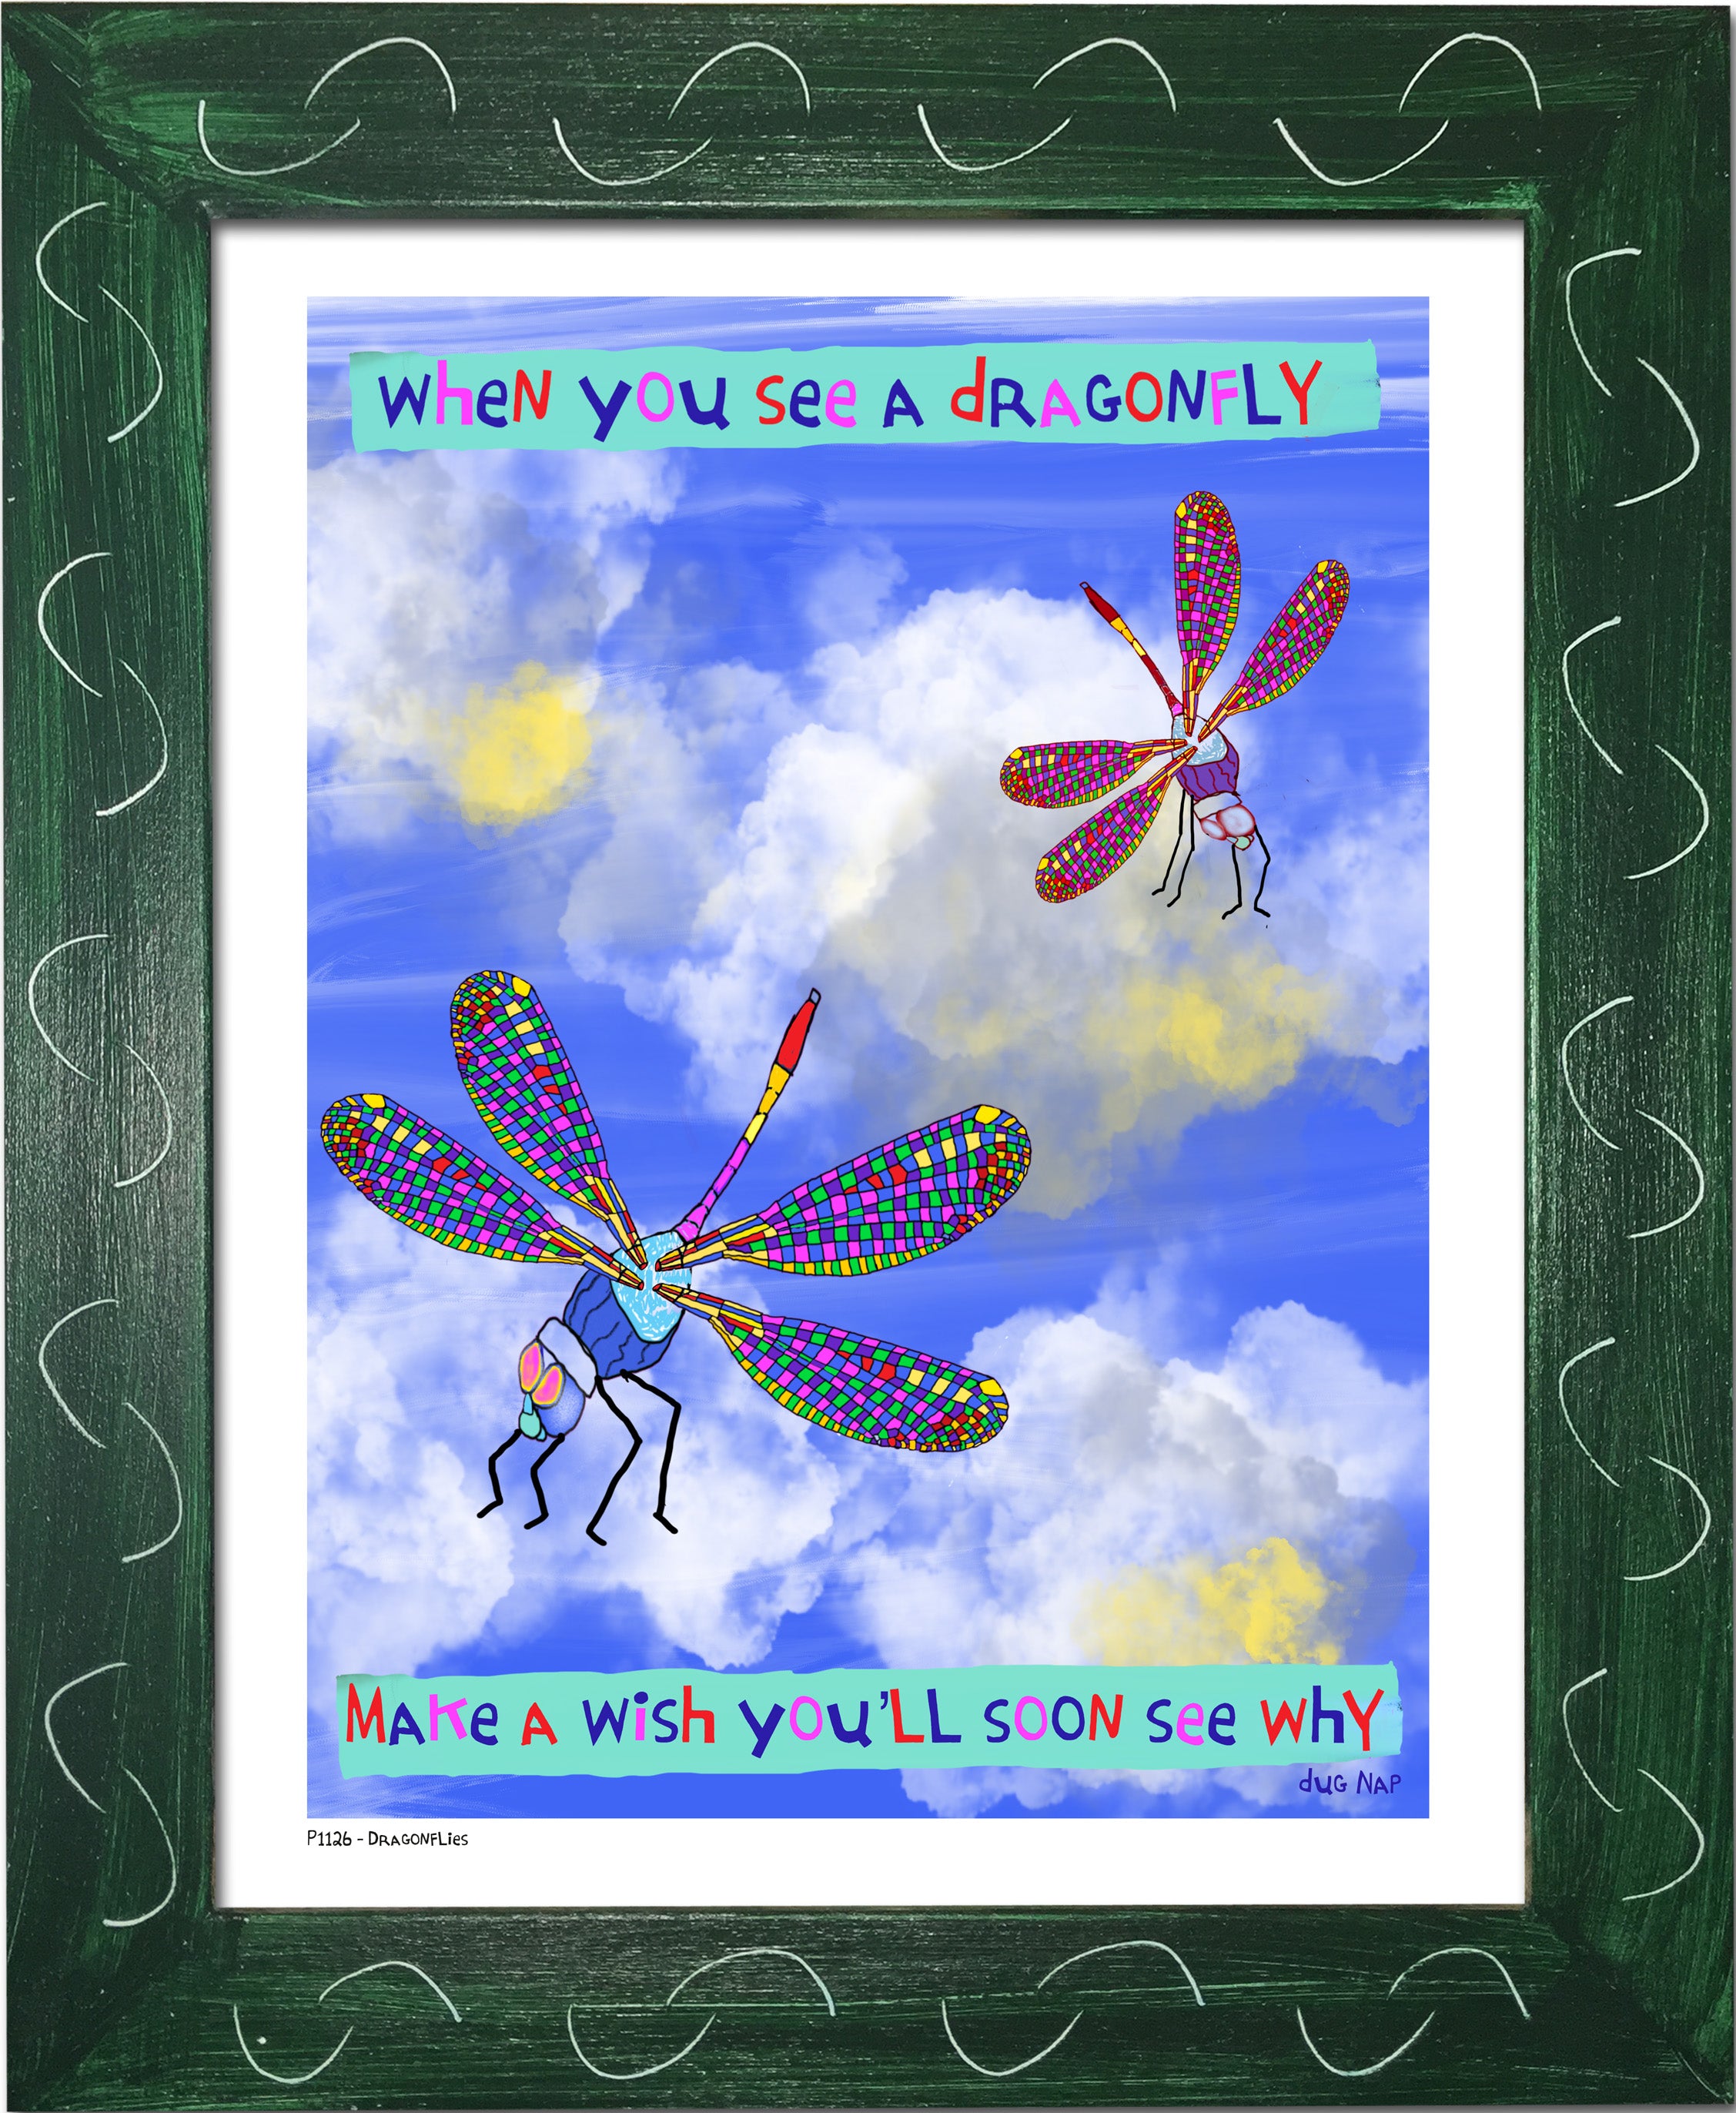 P1126 - Dragonflies - dug Nap Art